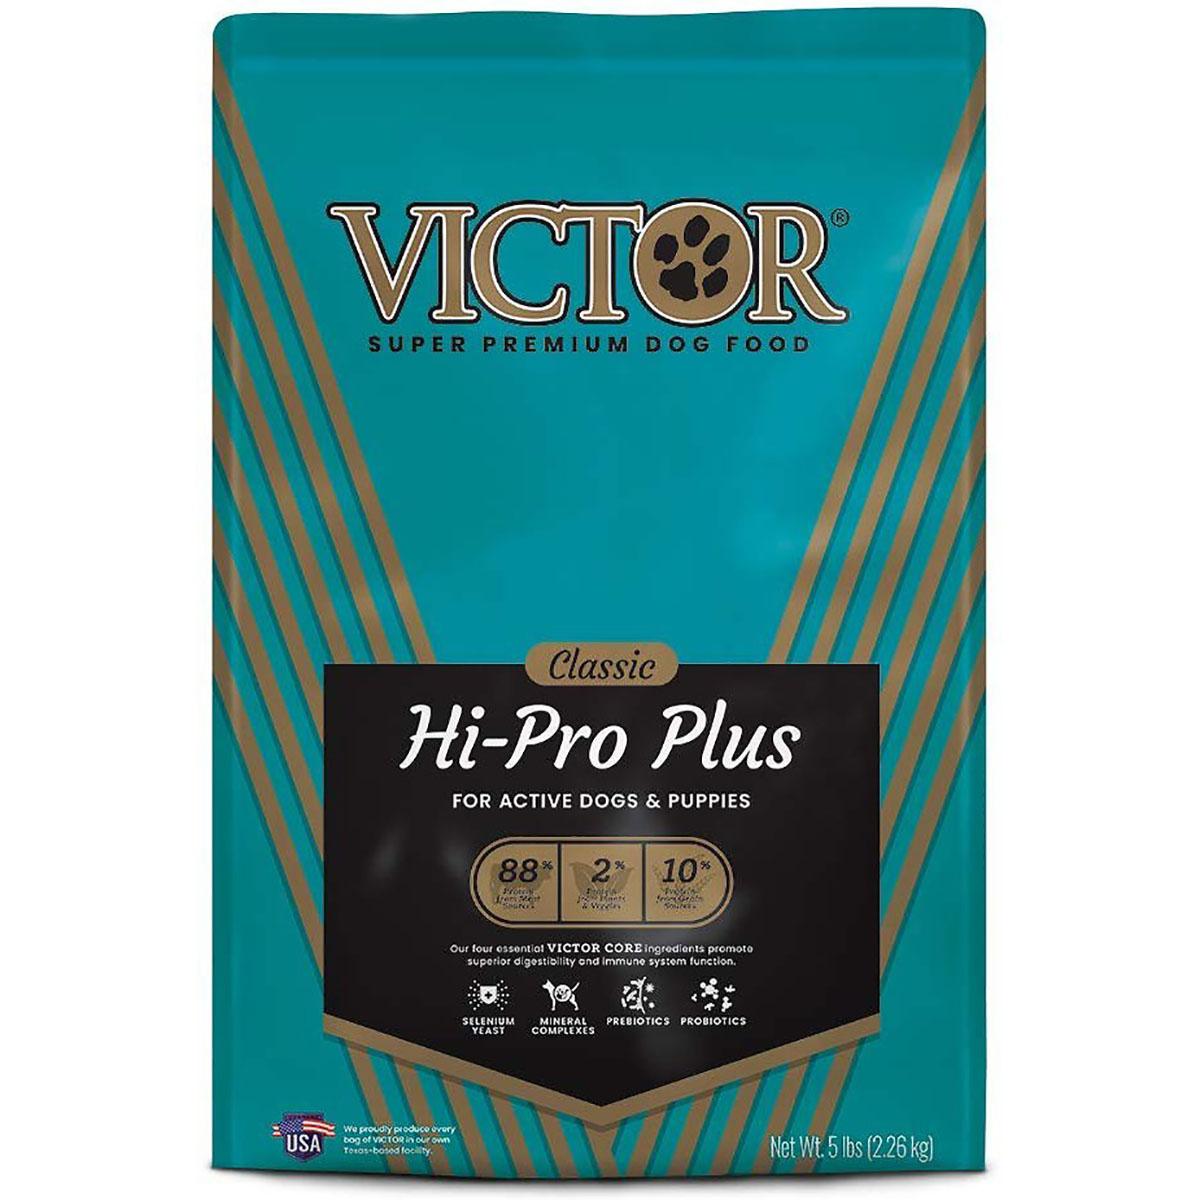 Victor Classic Hi-Pro Plus Dry Dog Food